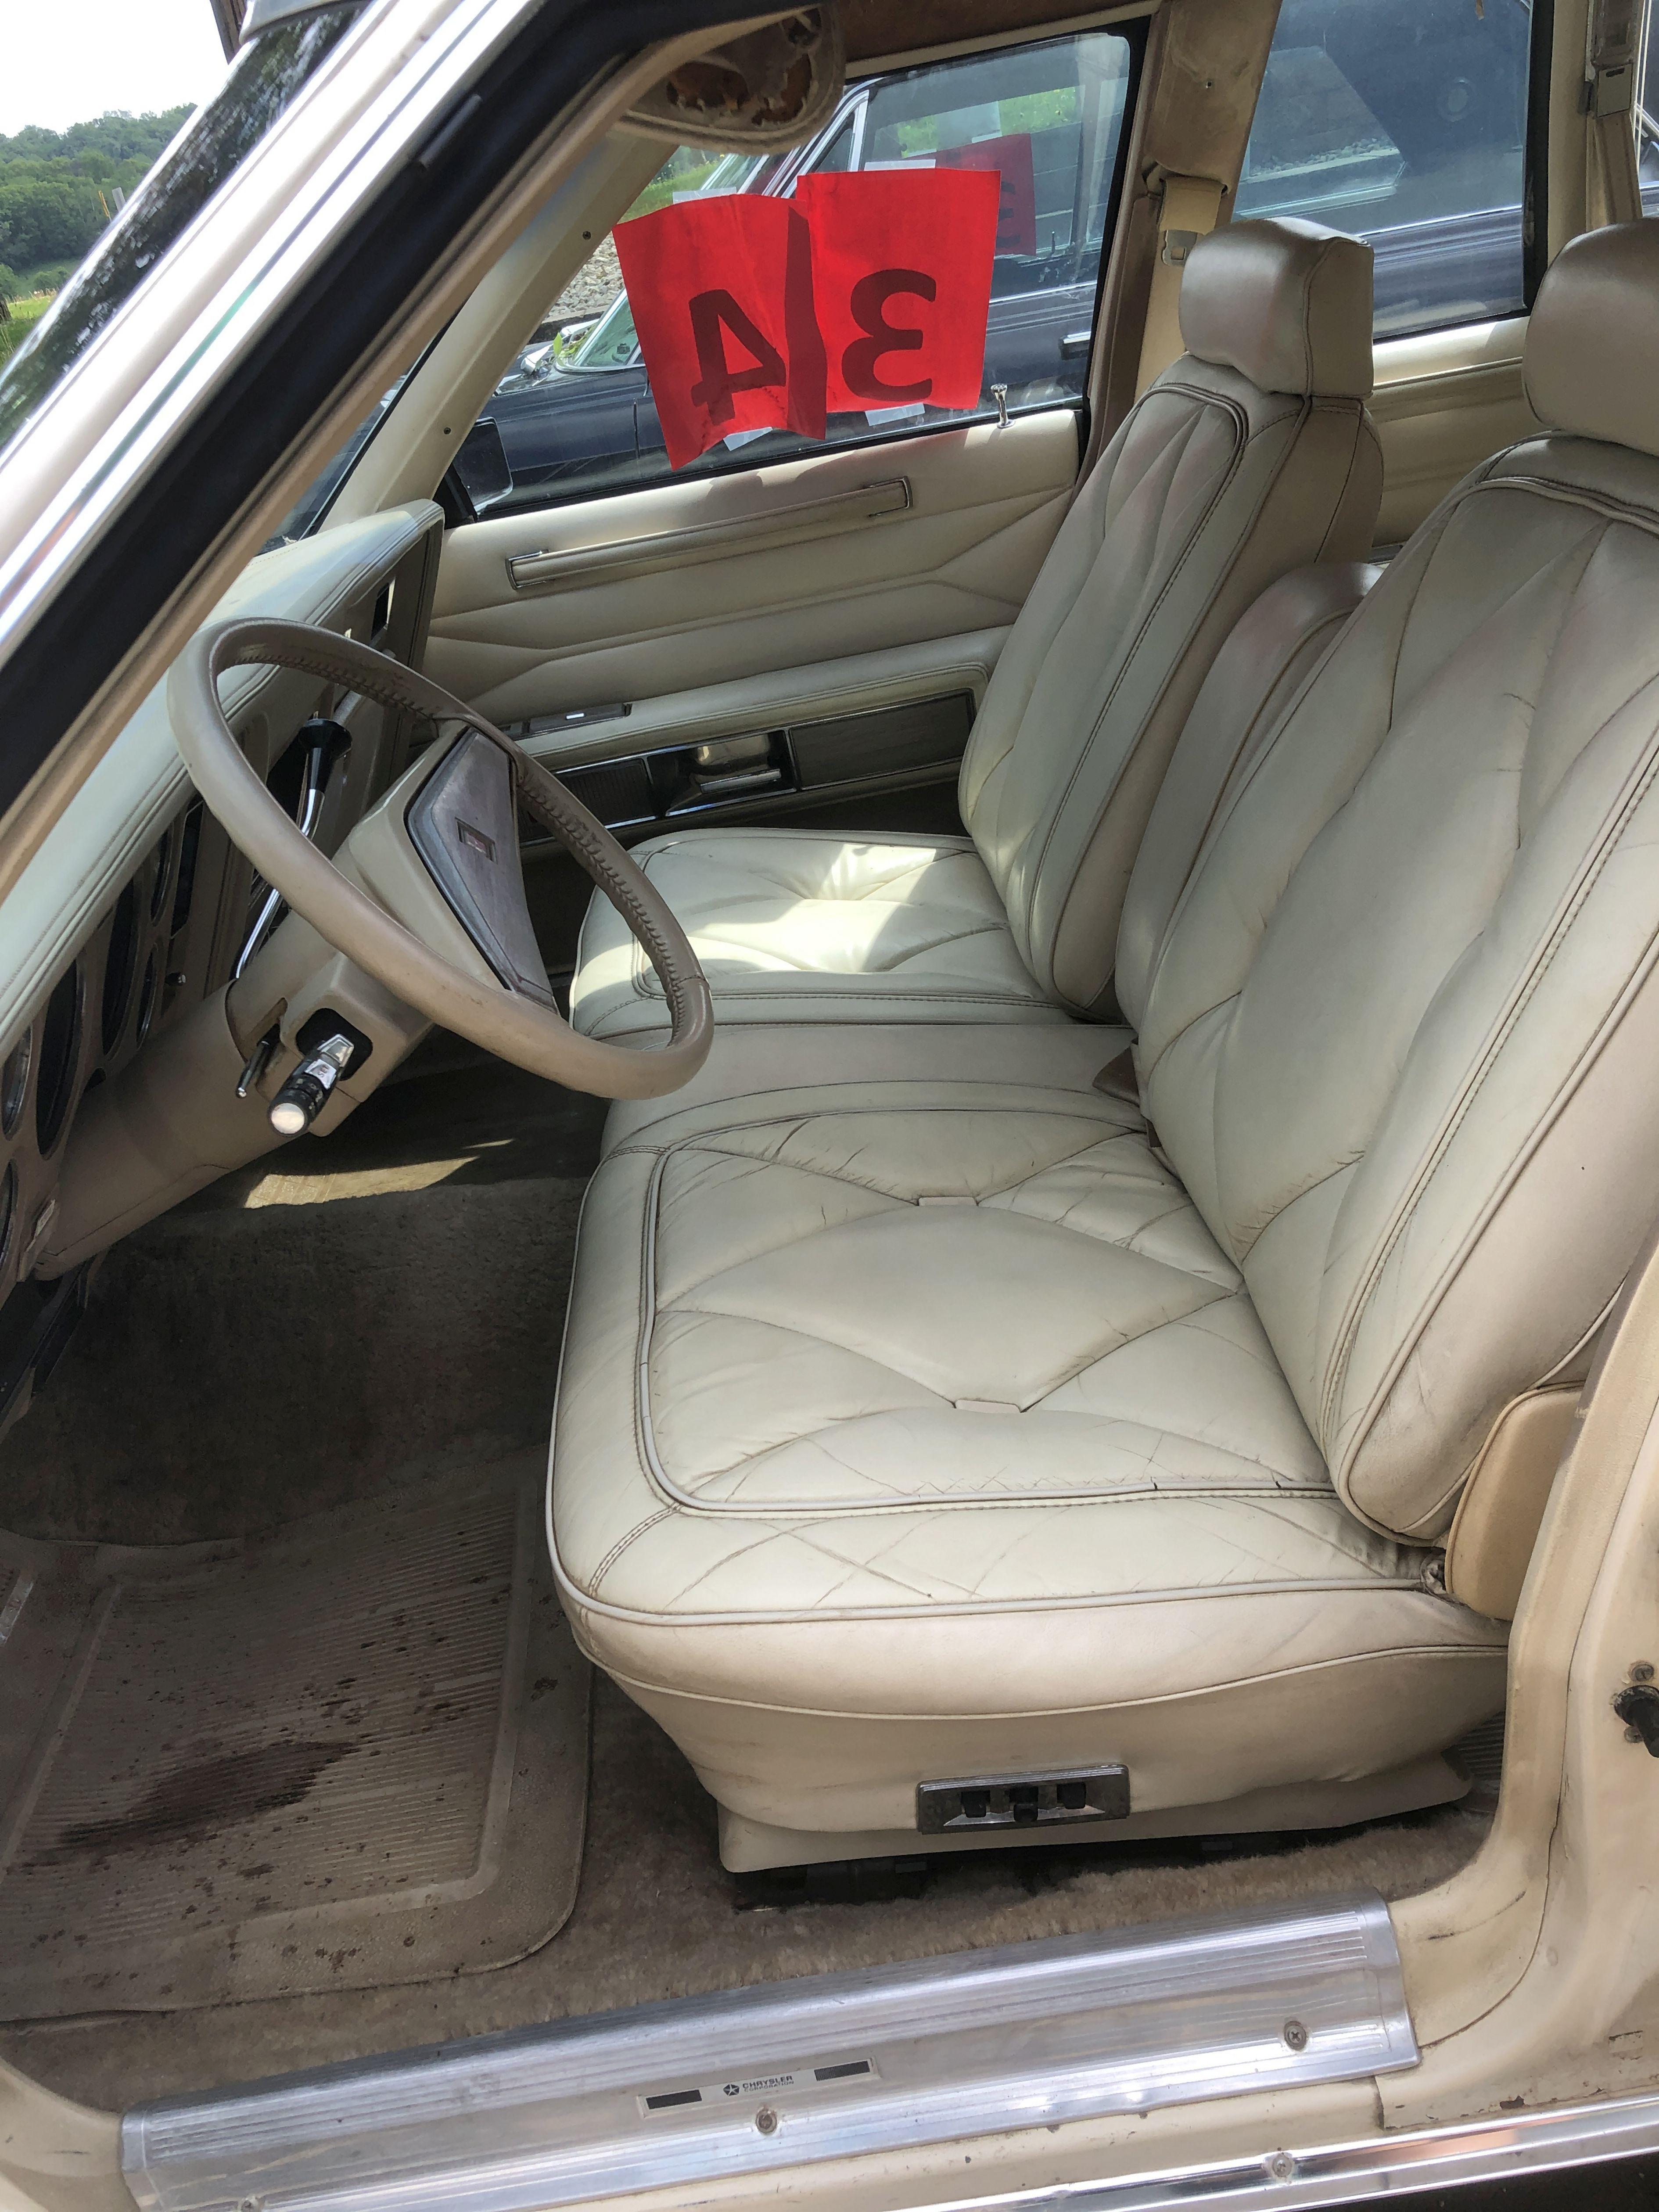 1979 Chrysler New Yorker 4 Door Car, 95,950 Miles Showing, Vinyl Top, Leather Interior, 360ci Engine